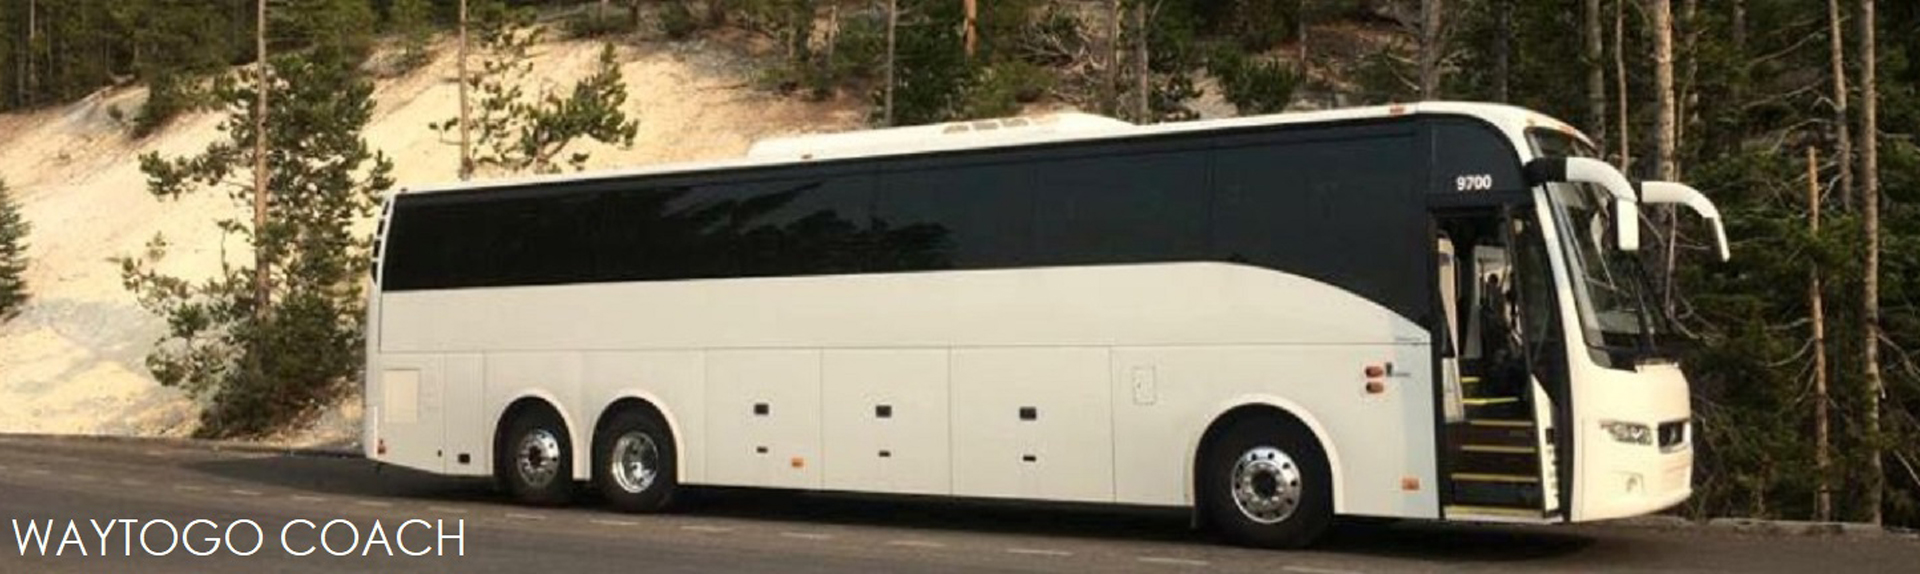 Coach Bus Rentat